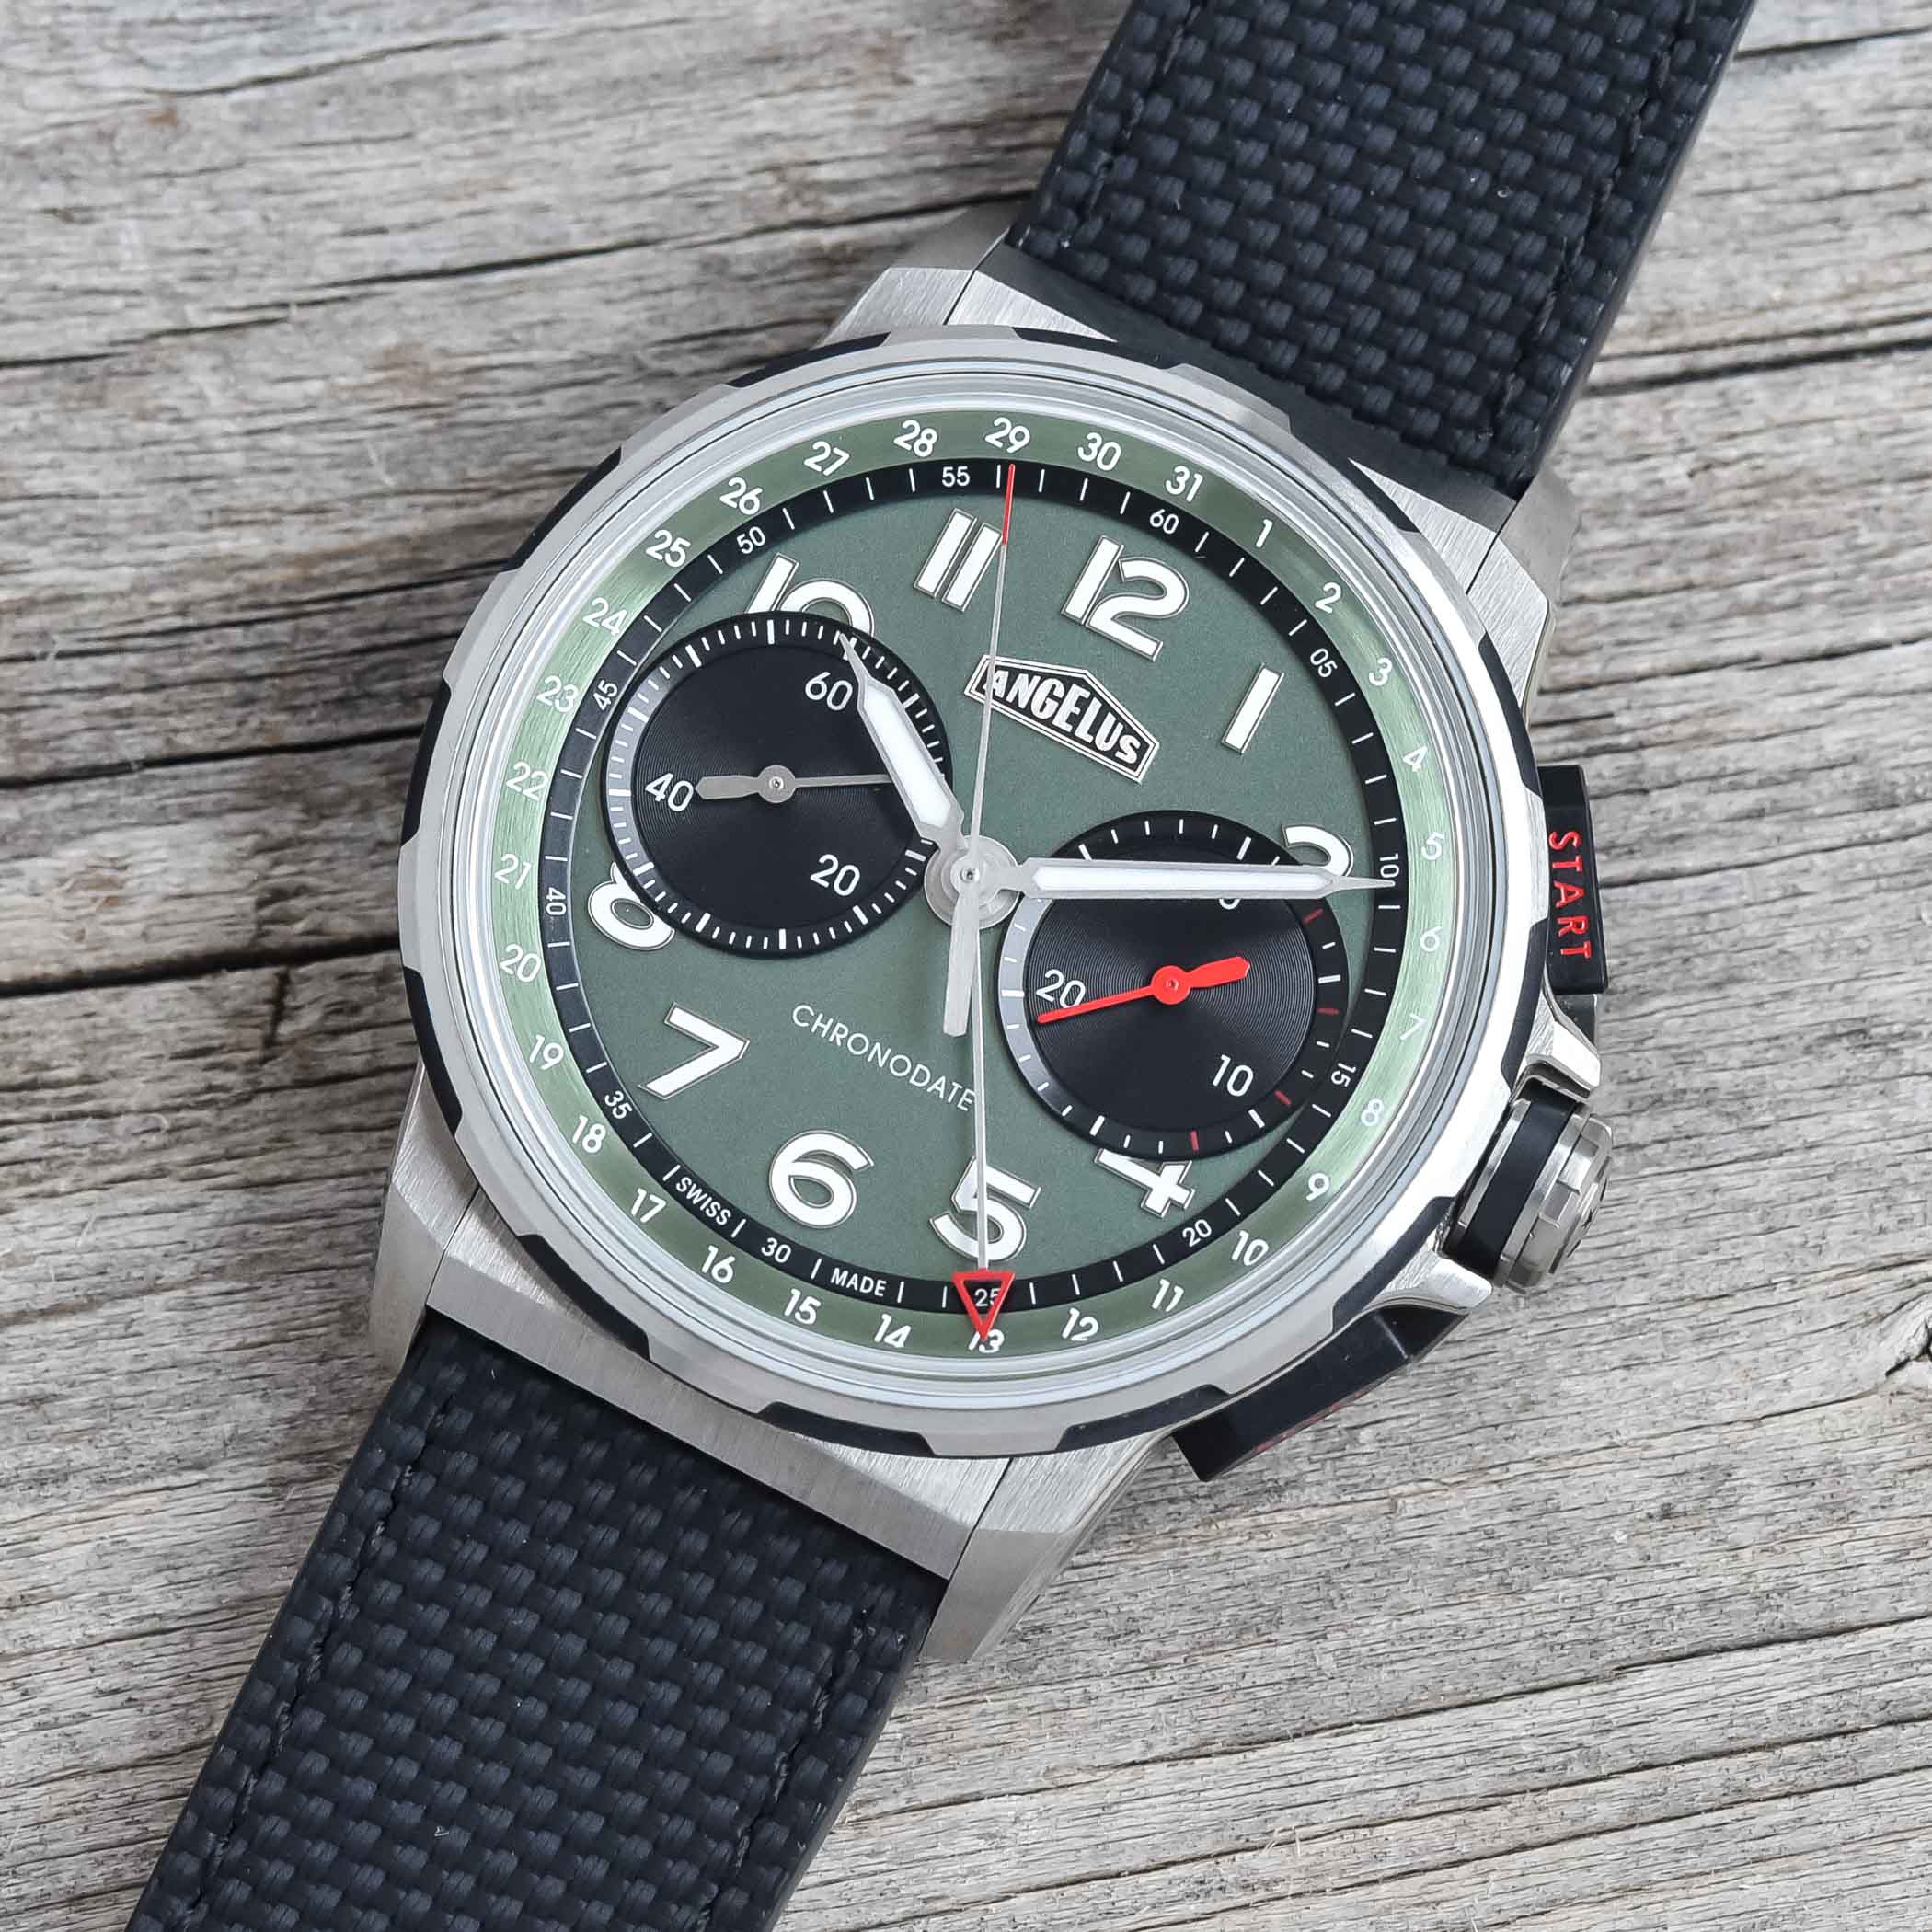 NEw Editions Angelus Chronodate - titanium bracelet fern green dial - video review - 6